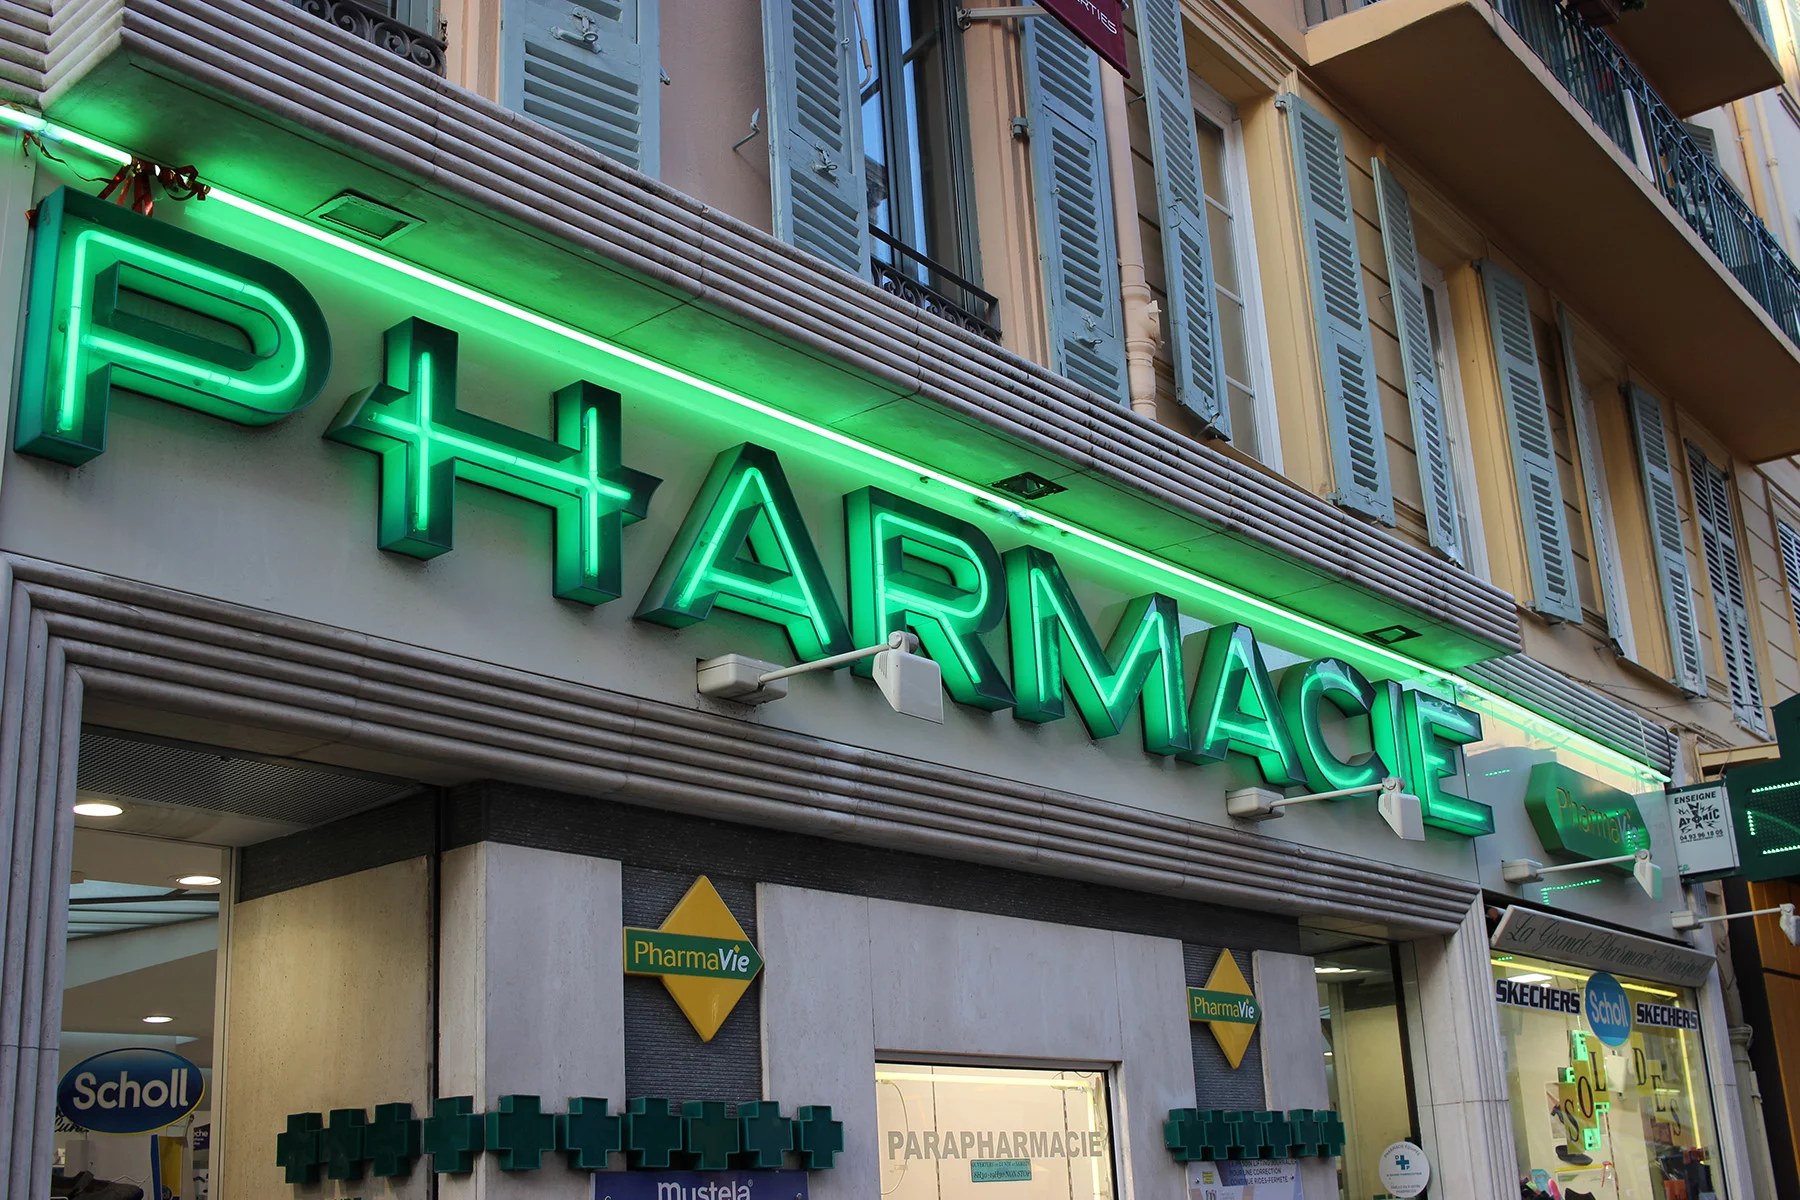 A pharmacy in Nice, France